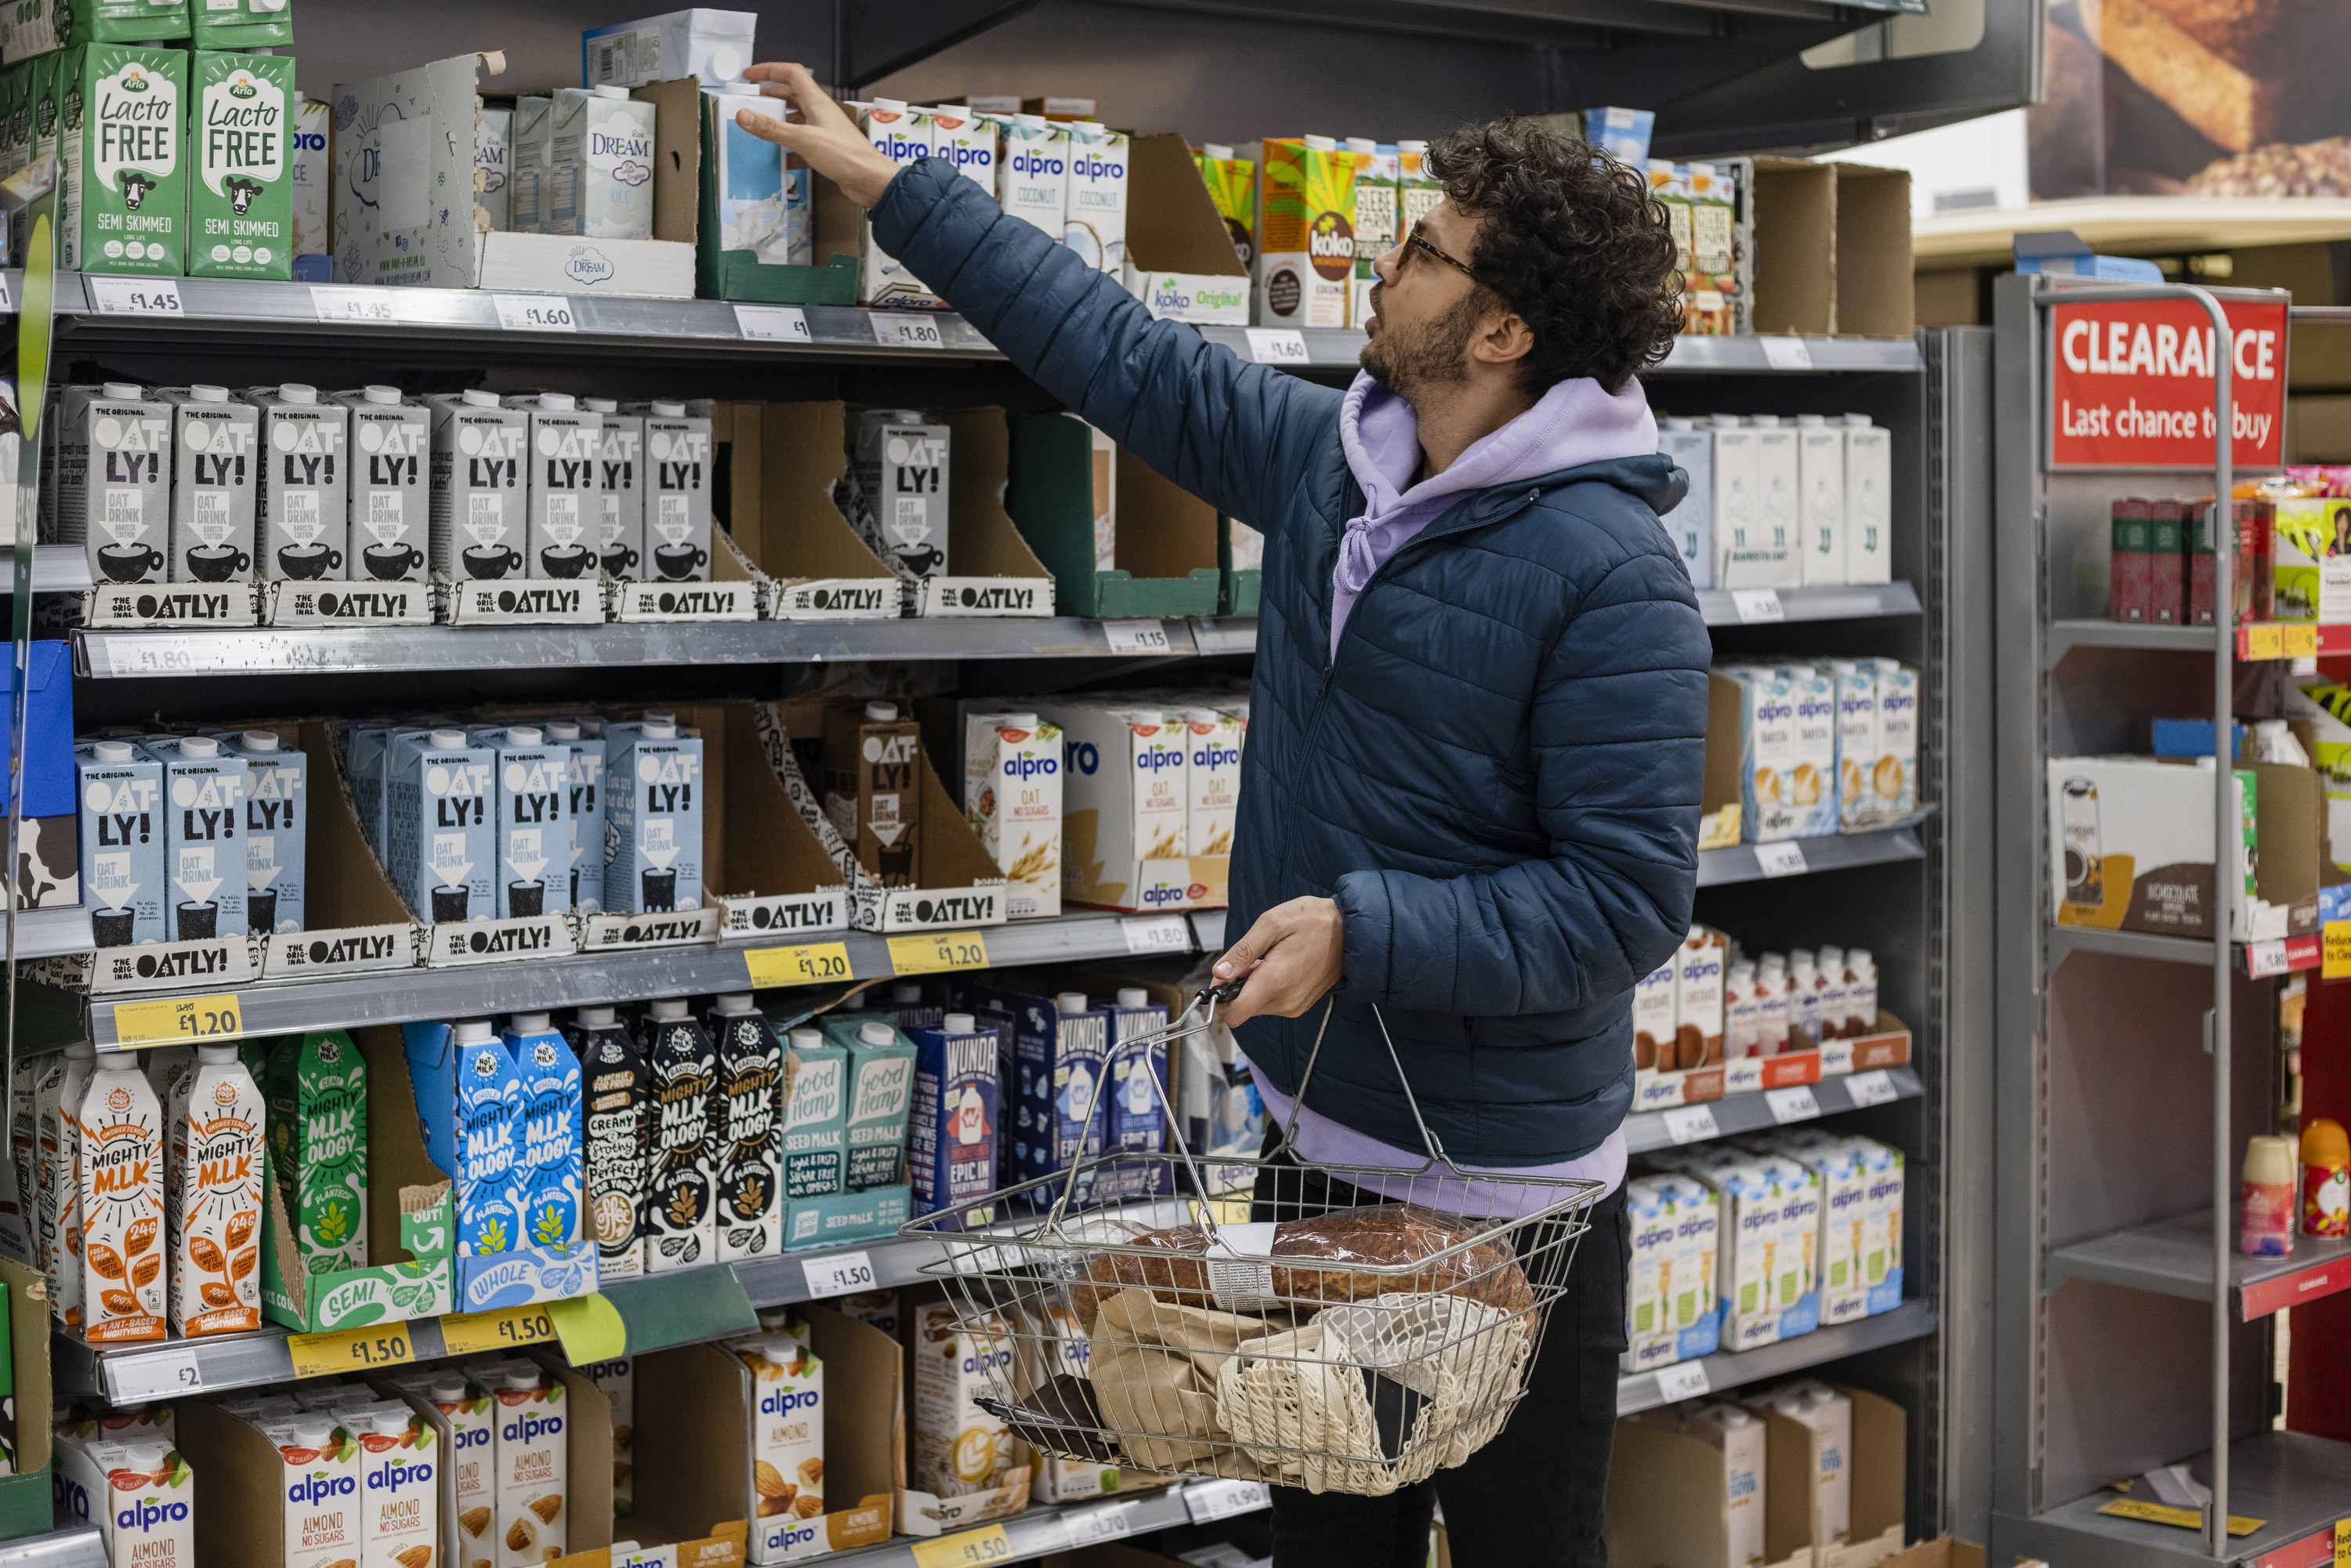 man reaches for milk in nondairy milk aisle